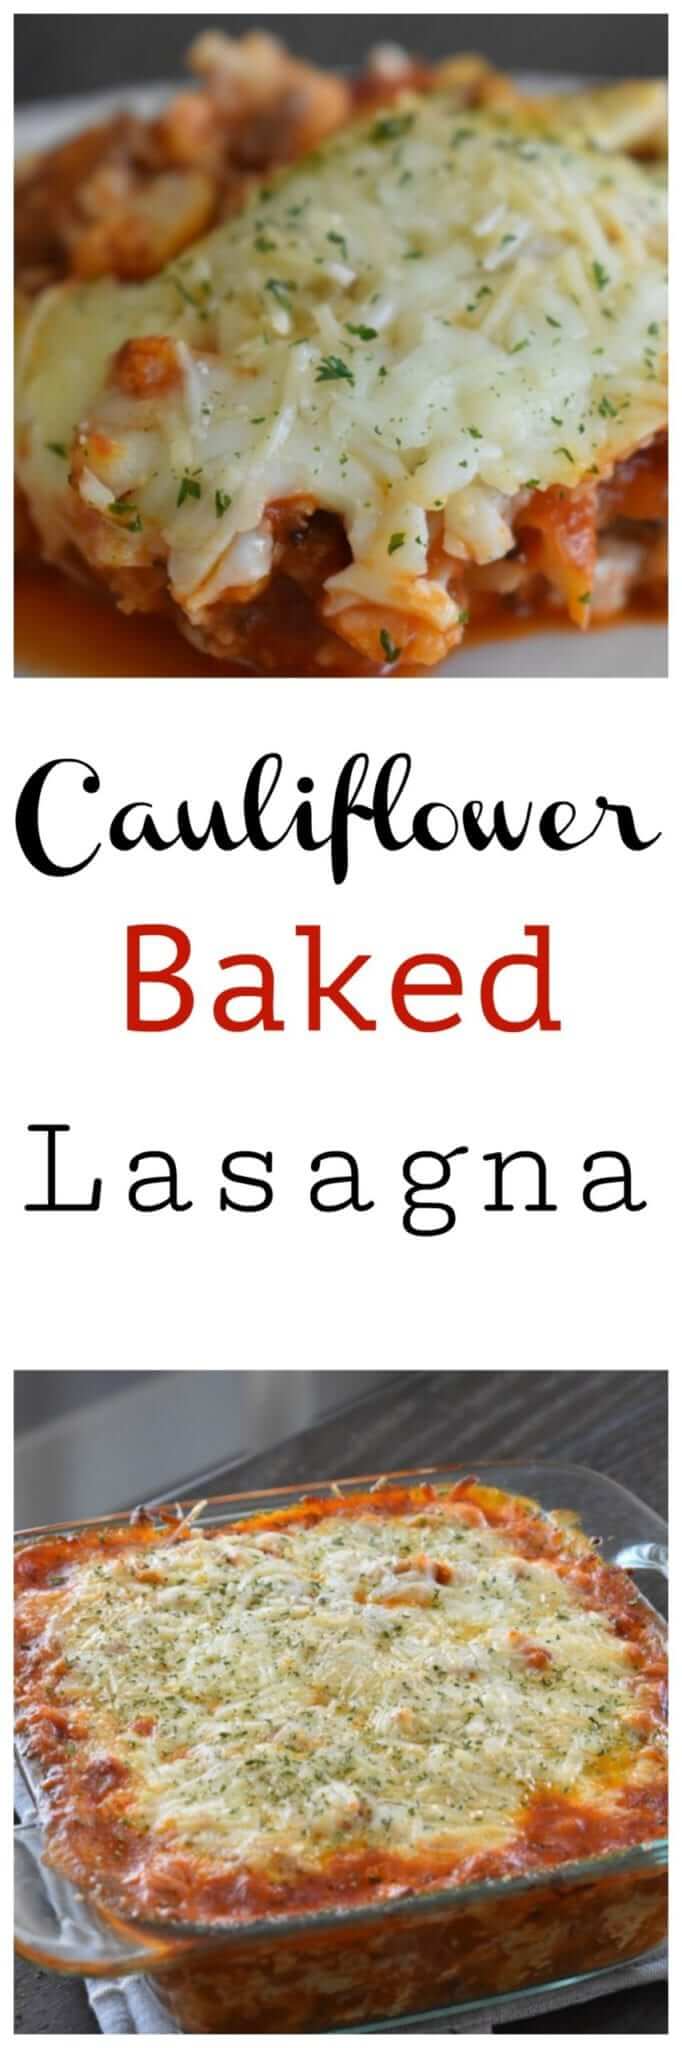 Cauliflower Baked Lasagna